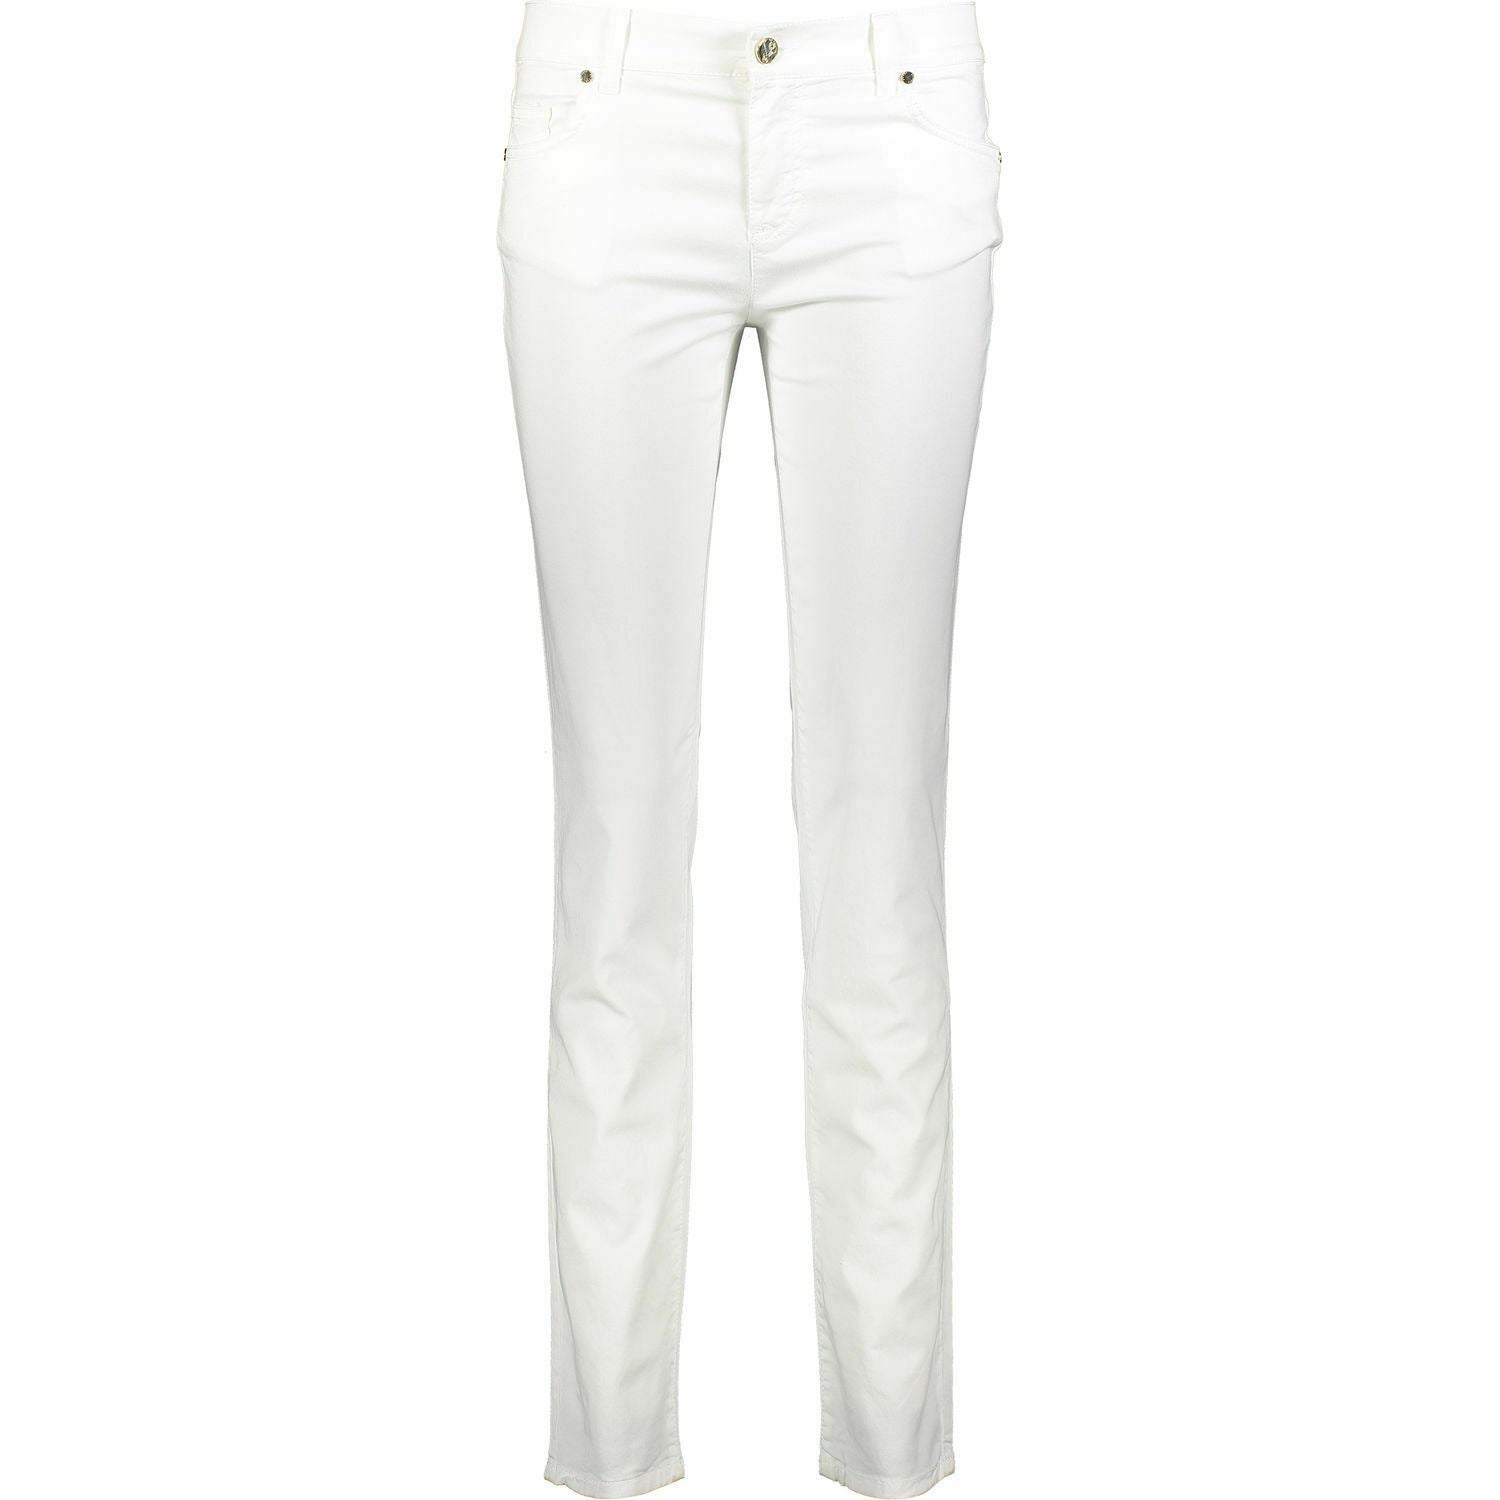 VERSACE JEANS Women's Skinny 5-Pocket Jeans Trousers White, sizes W28